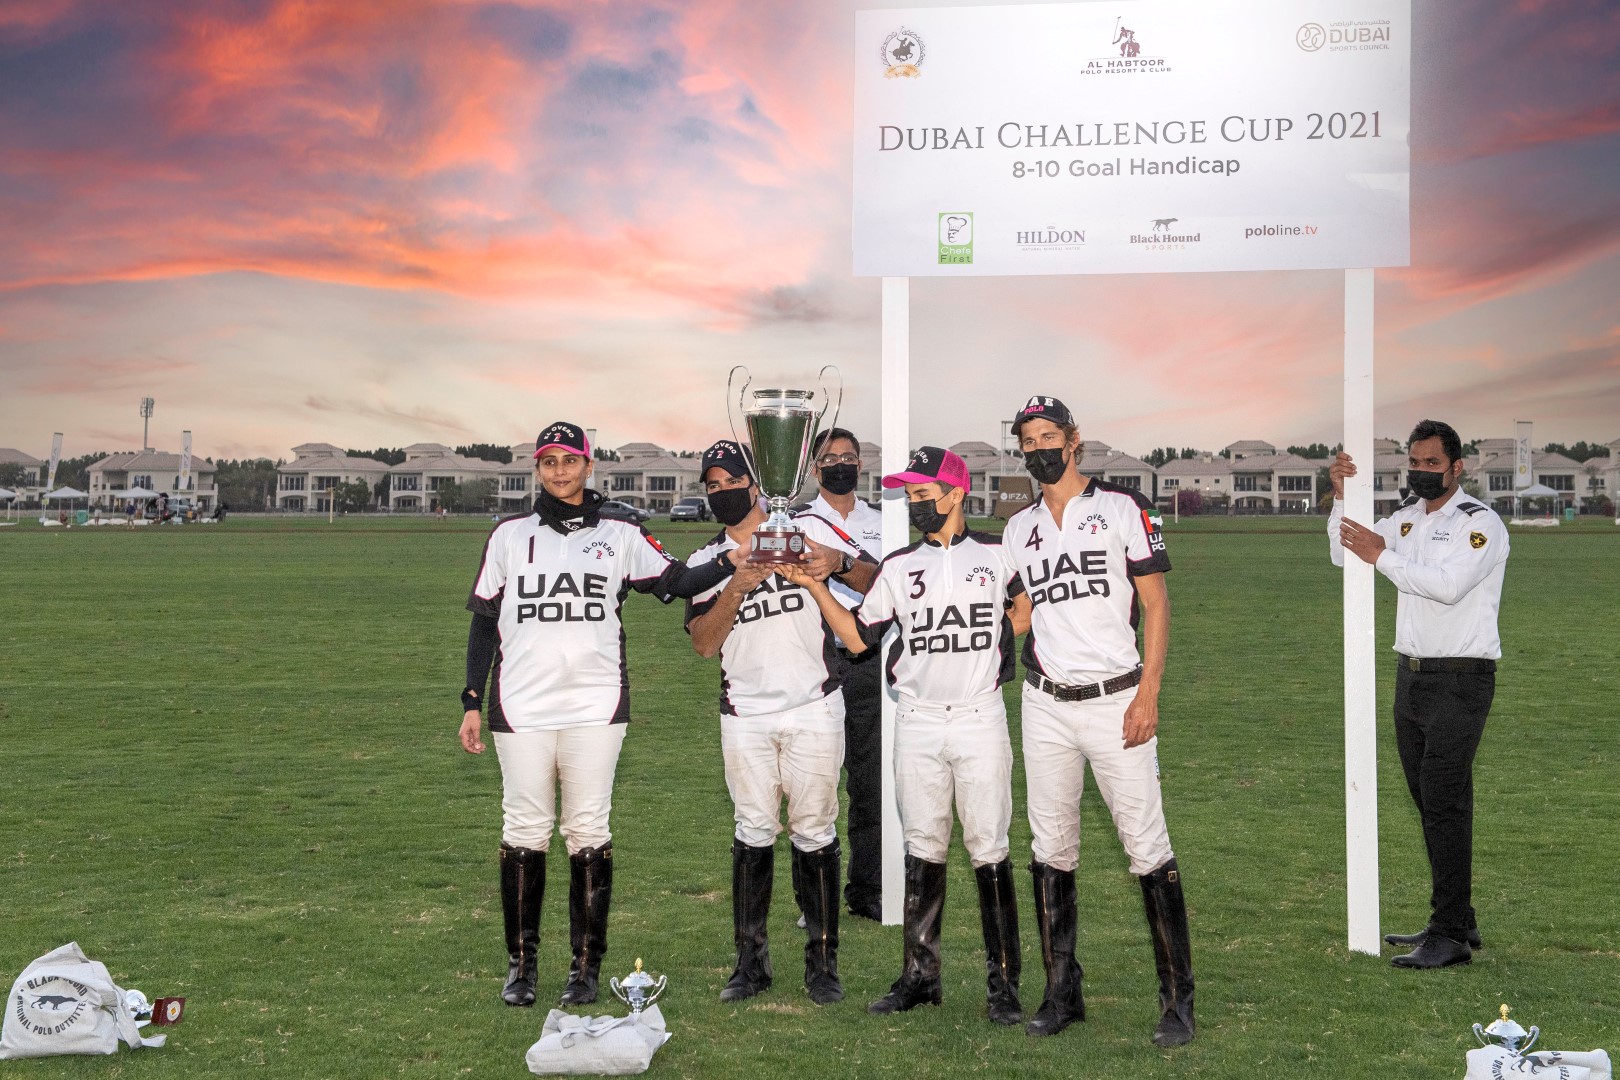 UAE Polo Revels in Triumph as the Gold Cup 2022 Dubai Open Champions